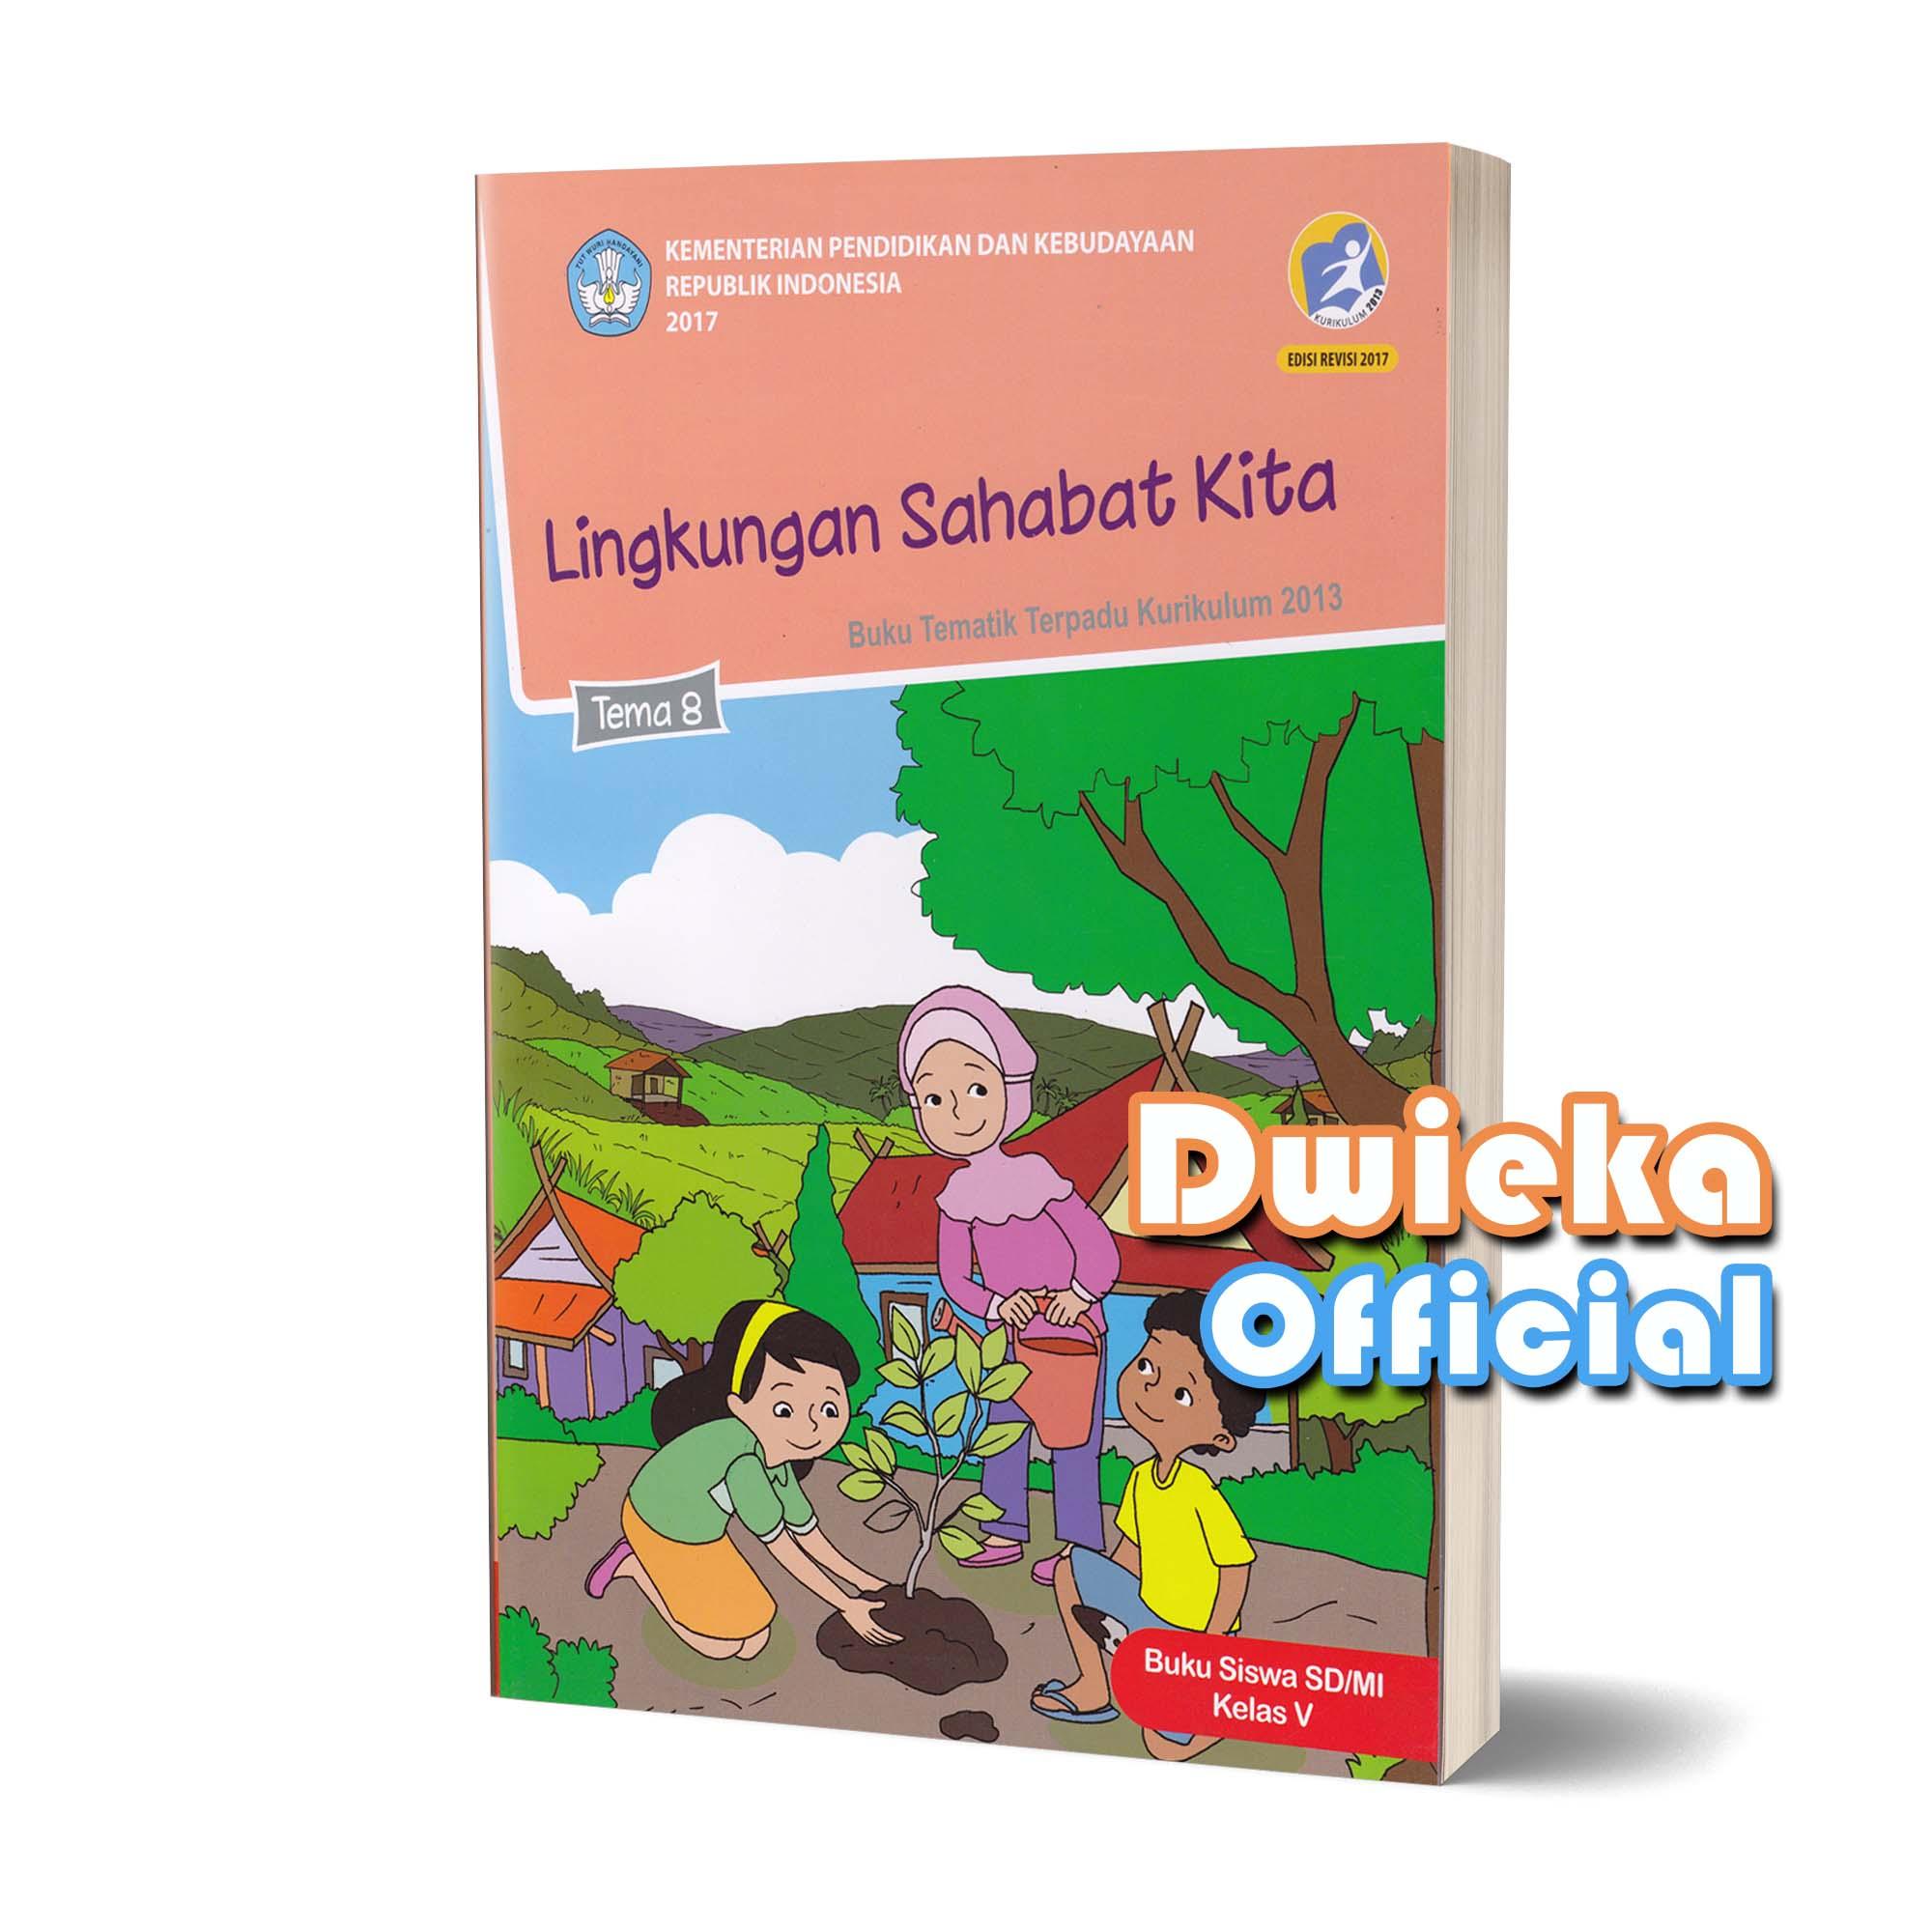 1 Jawa Timur Buku Tematik Kelas 5 Tema 8 "Lingkungan Sahabat Kita" Kurkulum 2013 Edisi Revisi 2017